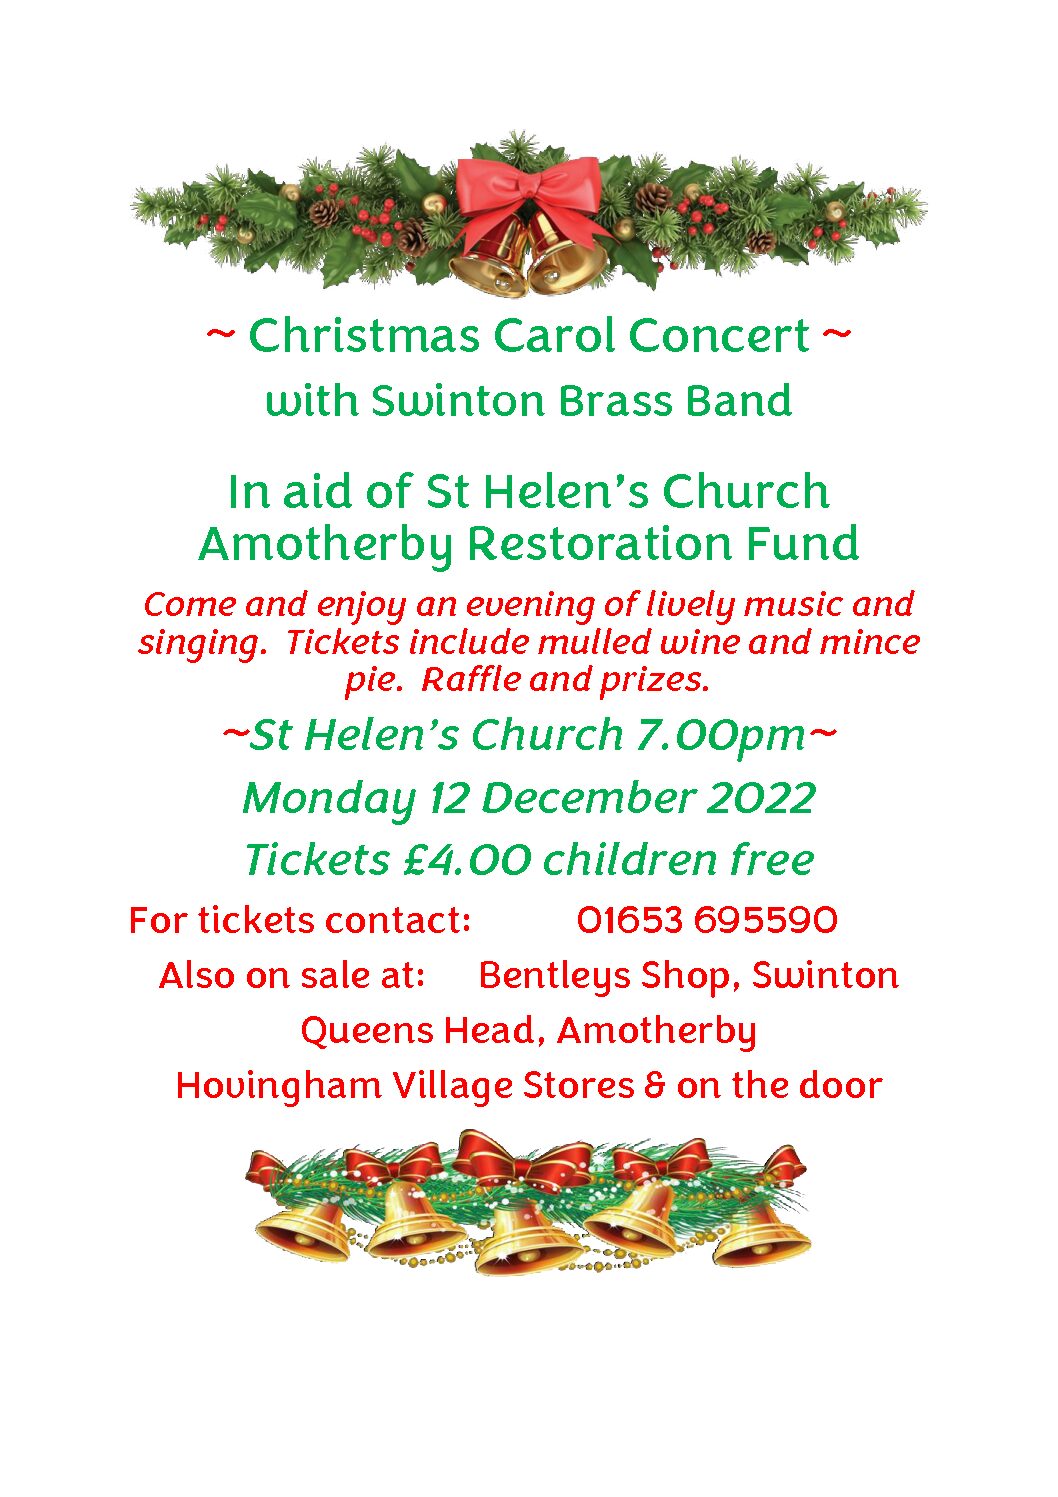 Christmas Carol Concert 12 December: St Helen’s Church Amotherby